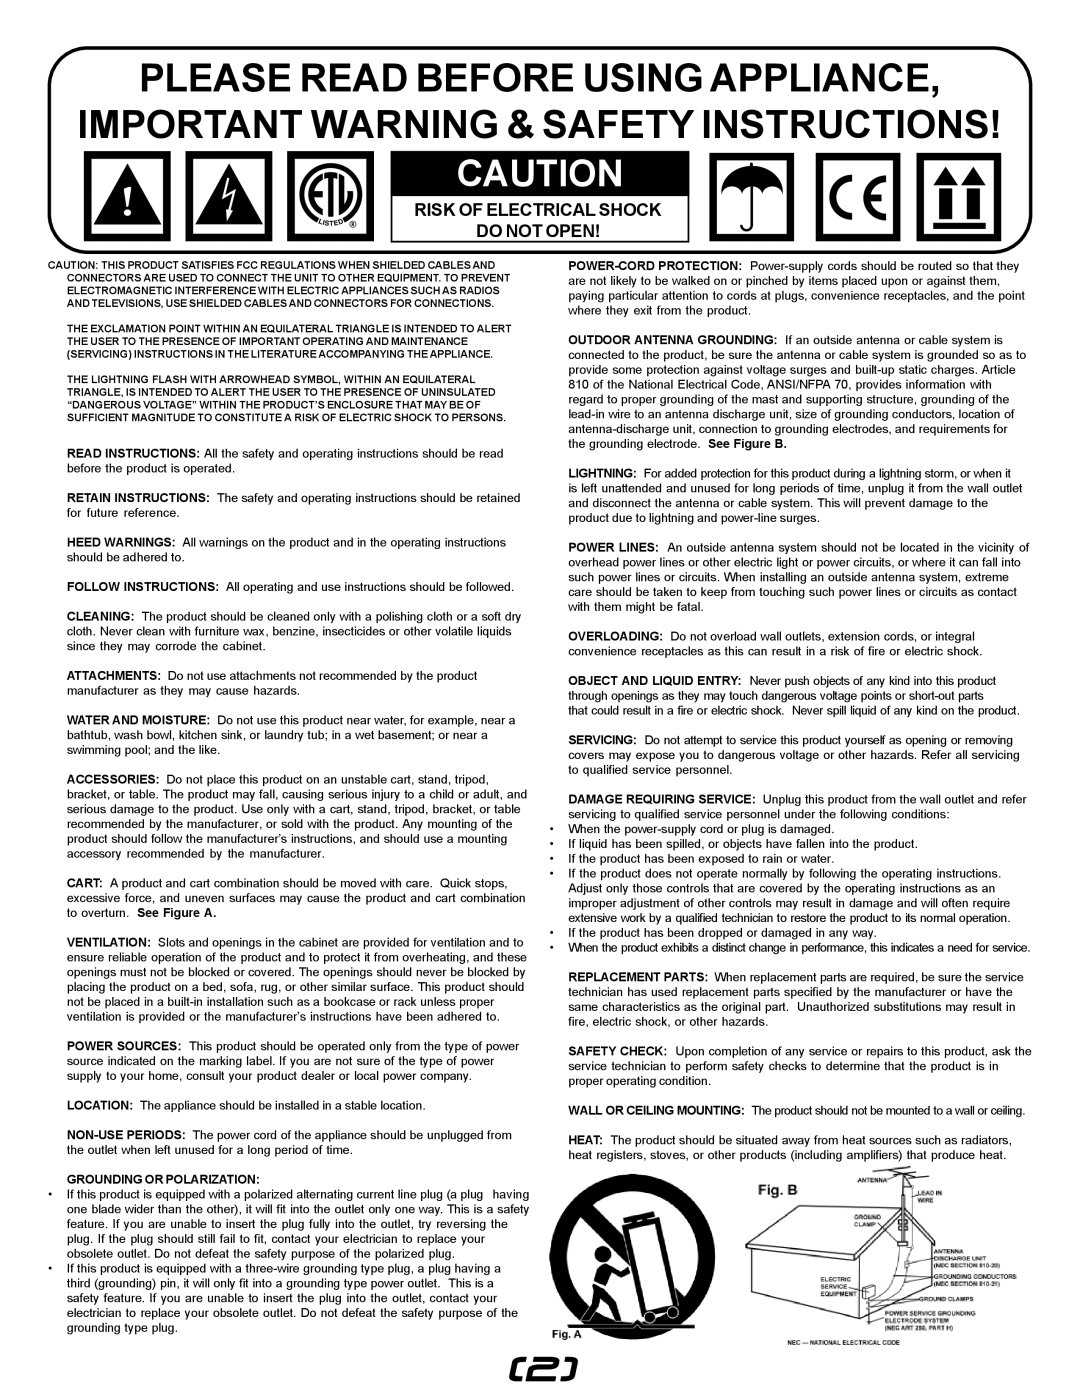 Gemini CDJ-0I manual Please Read Before Using Appliance, Important Warning & Safety Instructions, Grounding Or Polarization 